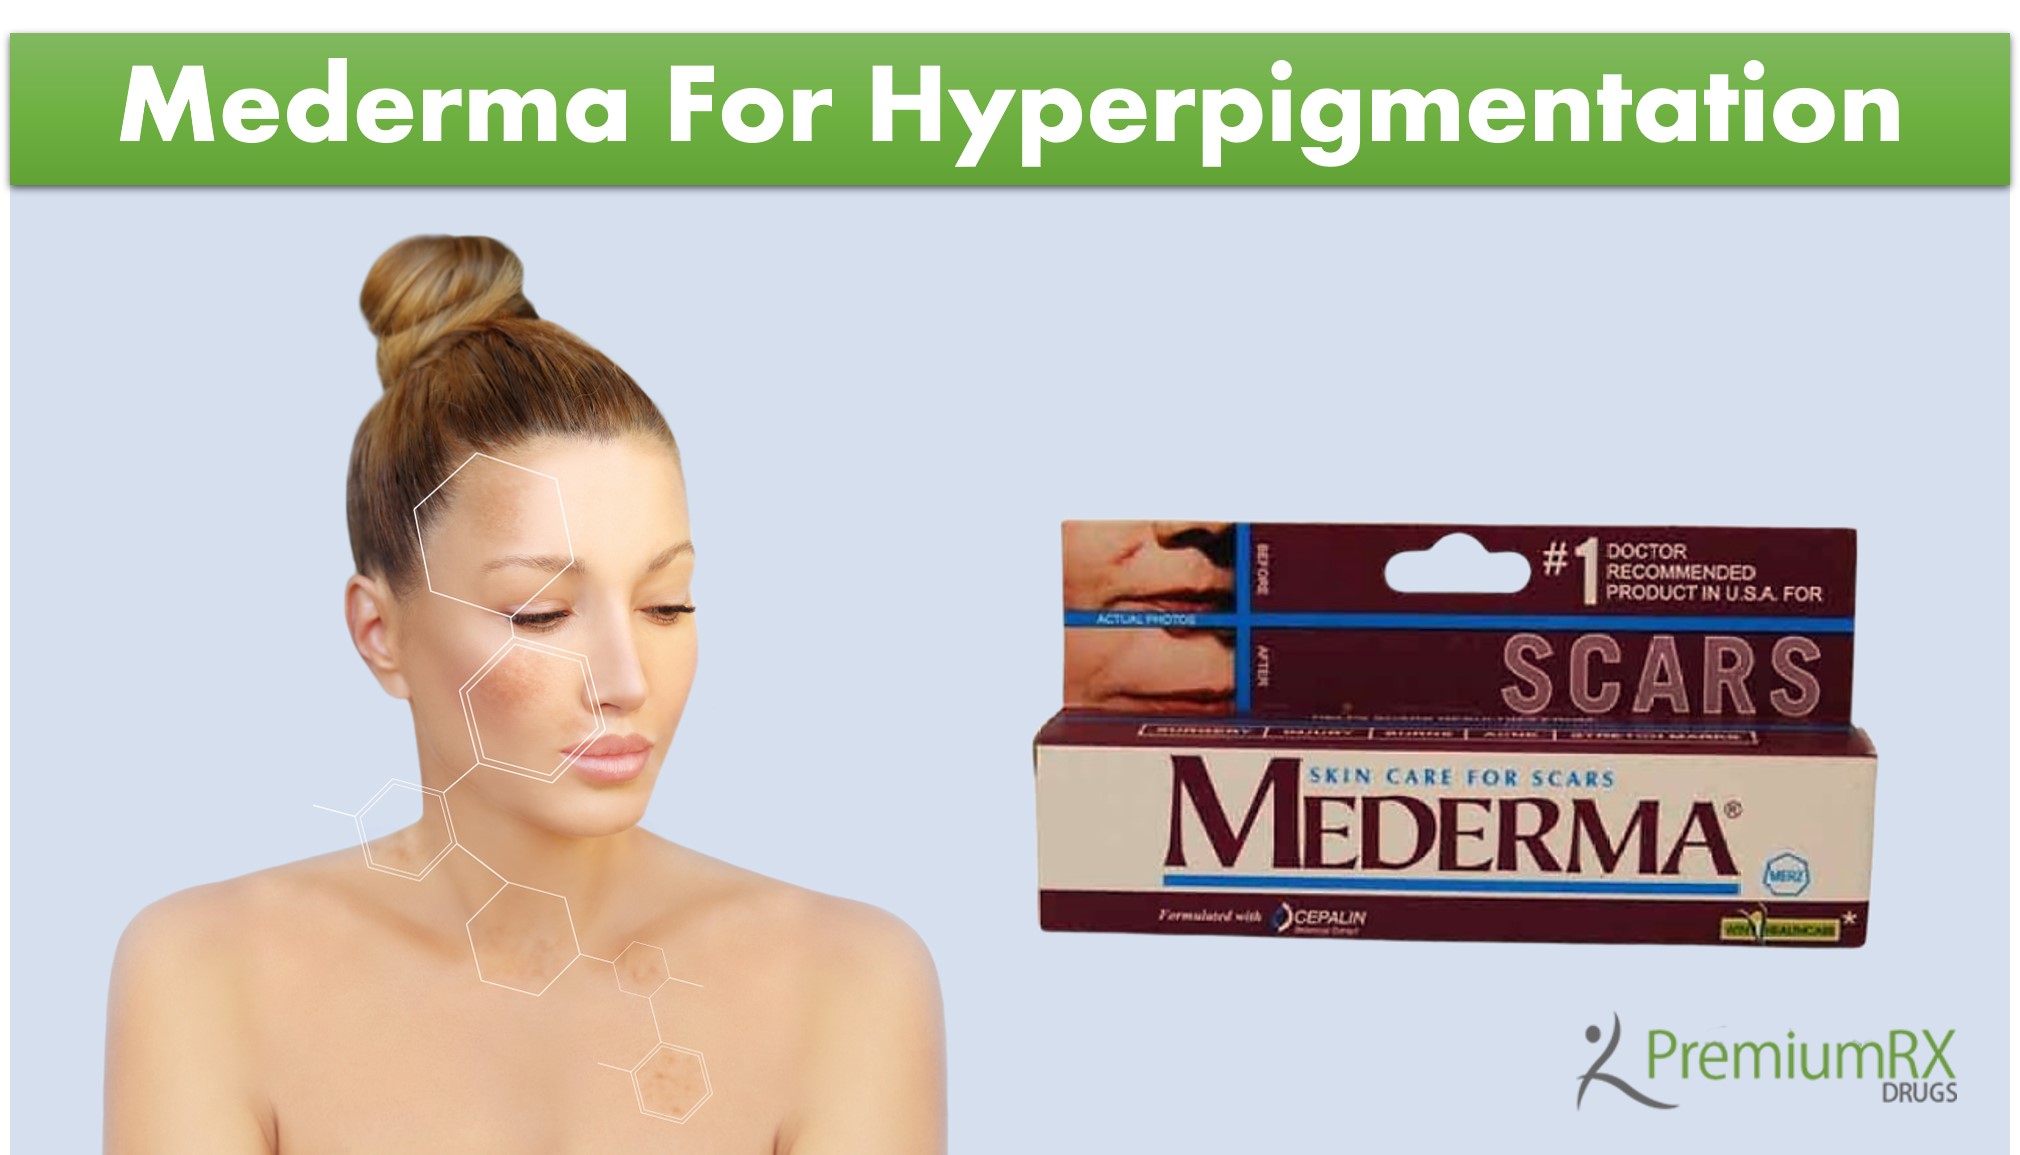 Mederma For Hyperpigmentation